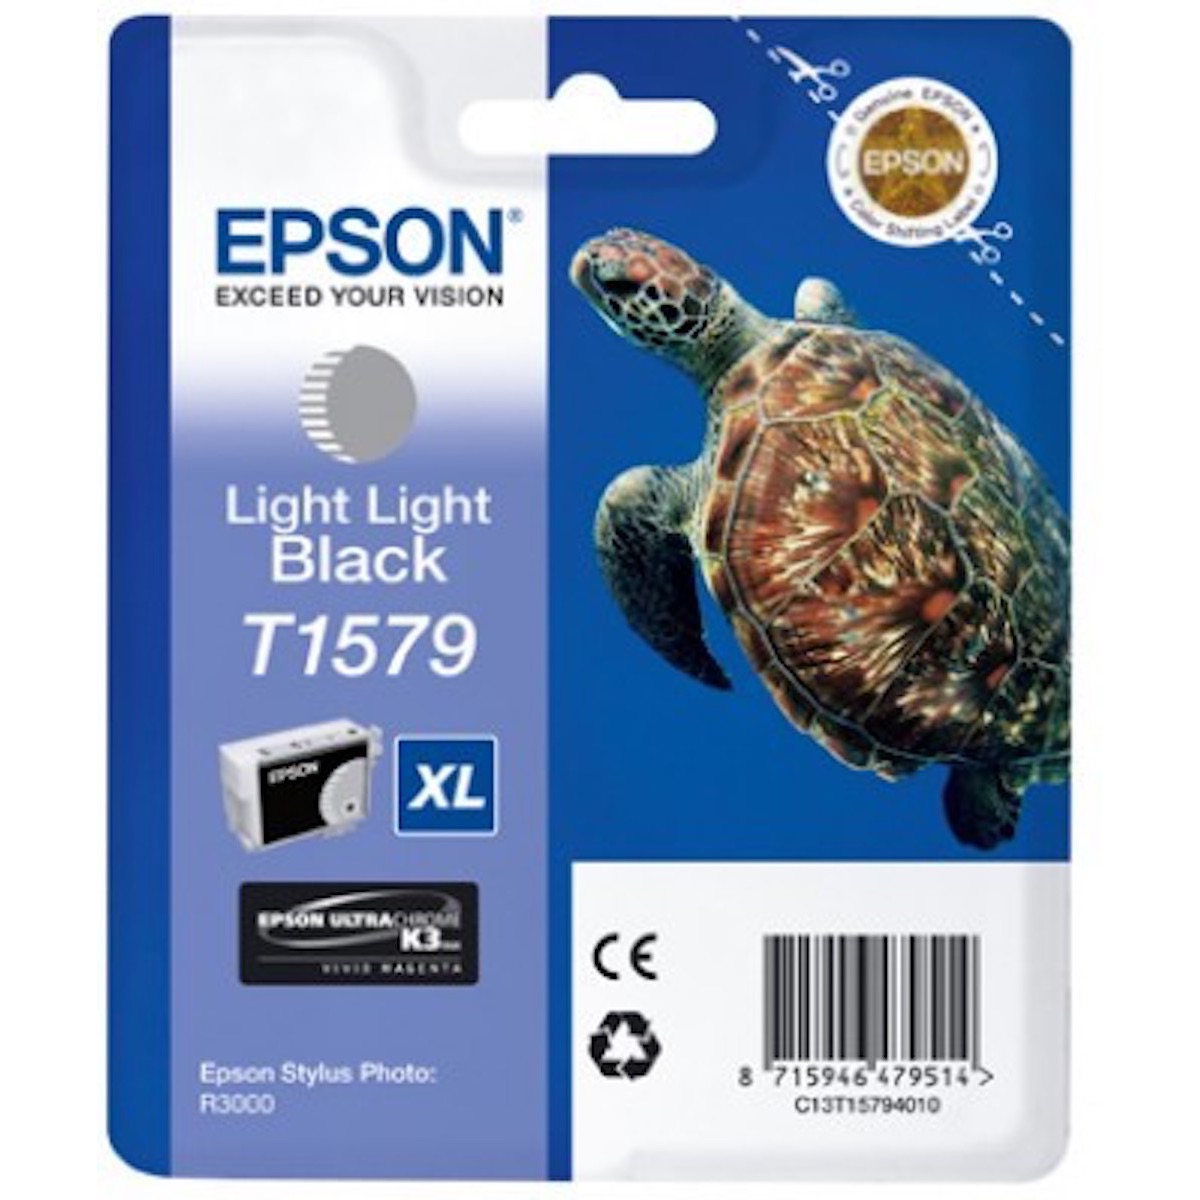 Epson T1579 light light black Tinte